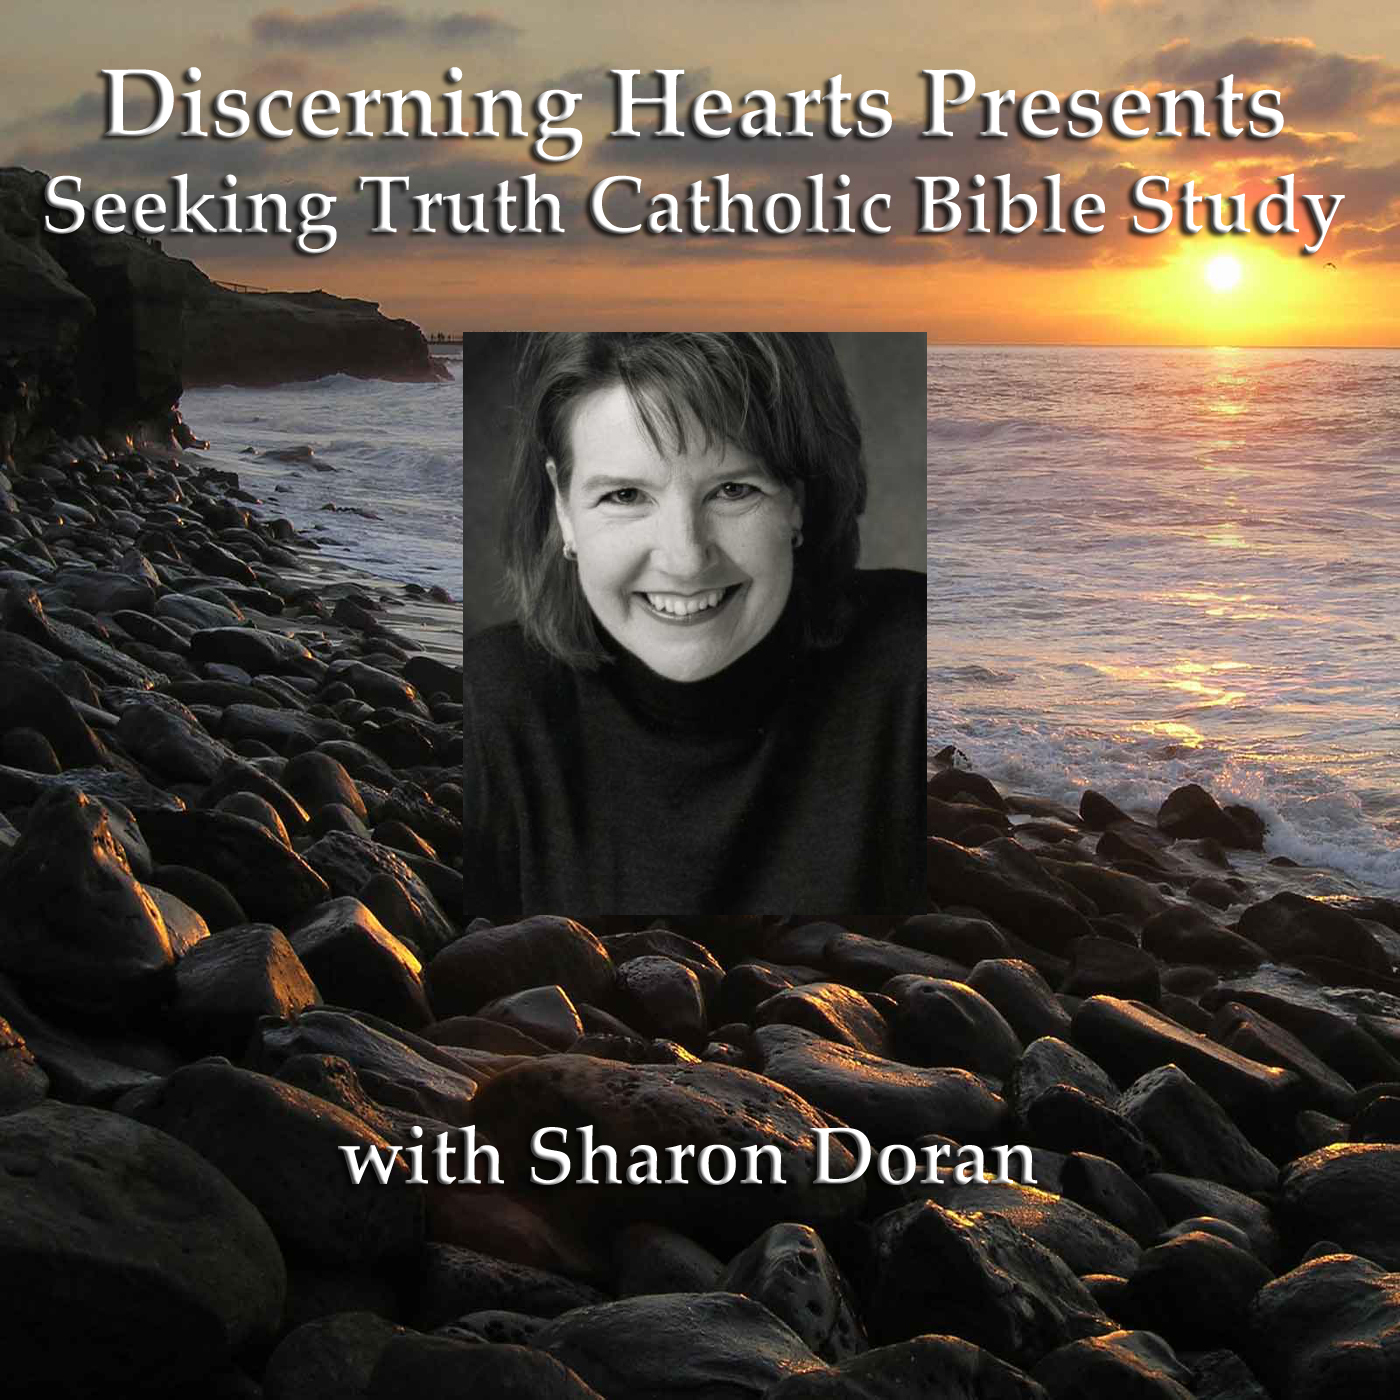 Seeking Truth Catholic Bible Study with Sharon Doran - Discerning Hearts